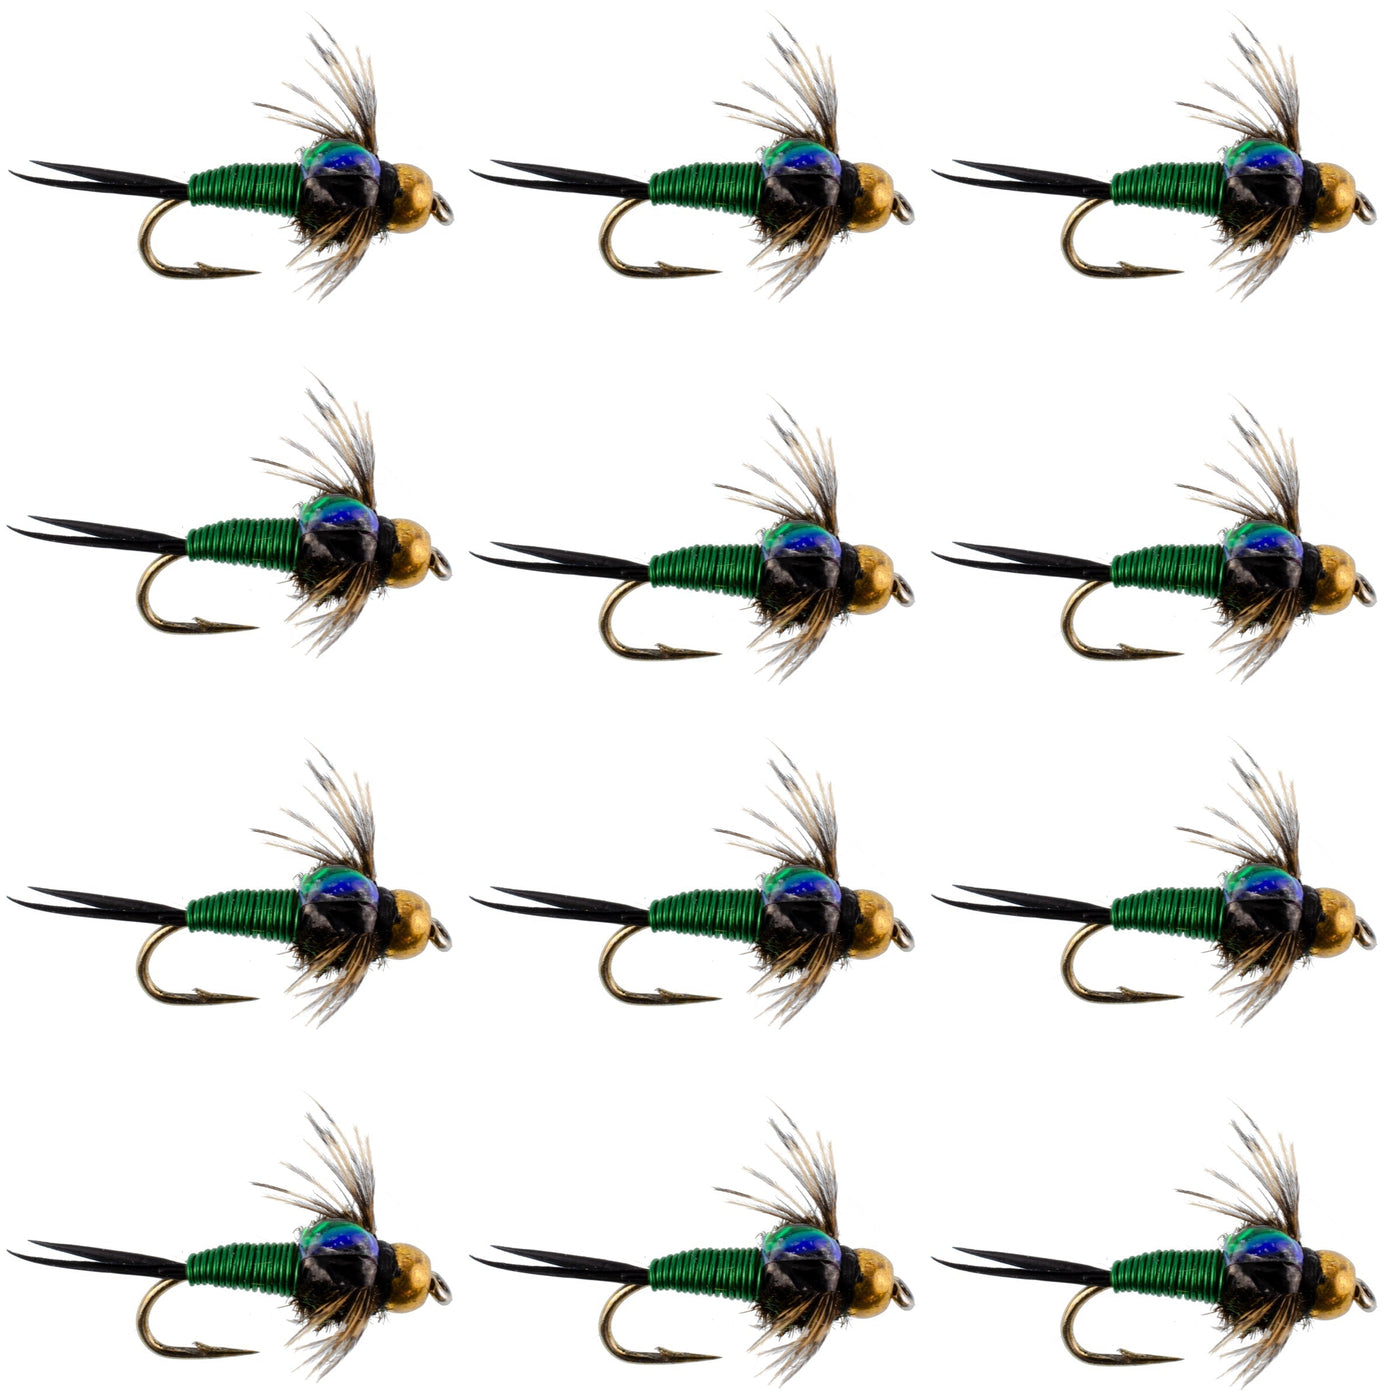 Bead Head Green Copper John Nymph Fly Fishing Flies - 1 Dozen Flies Hook Size 18